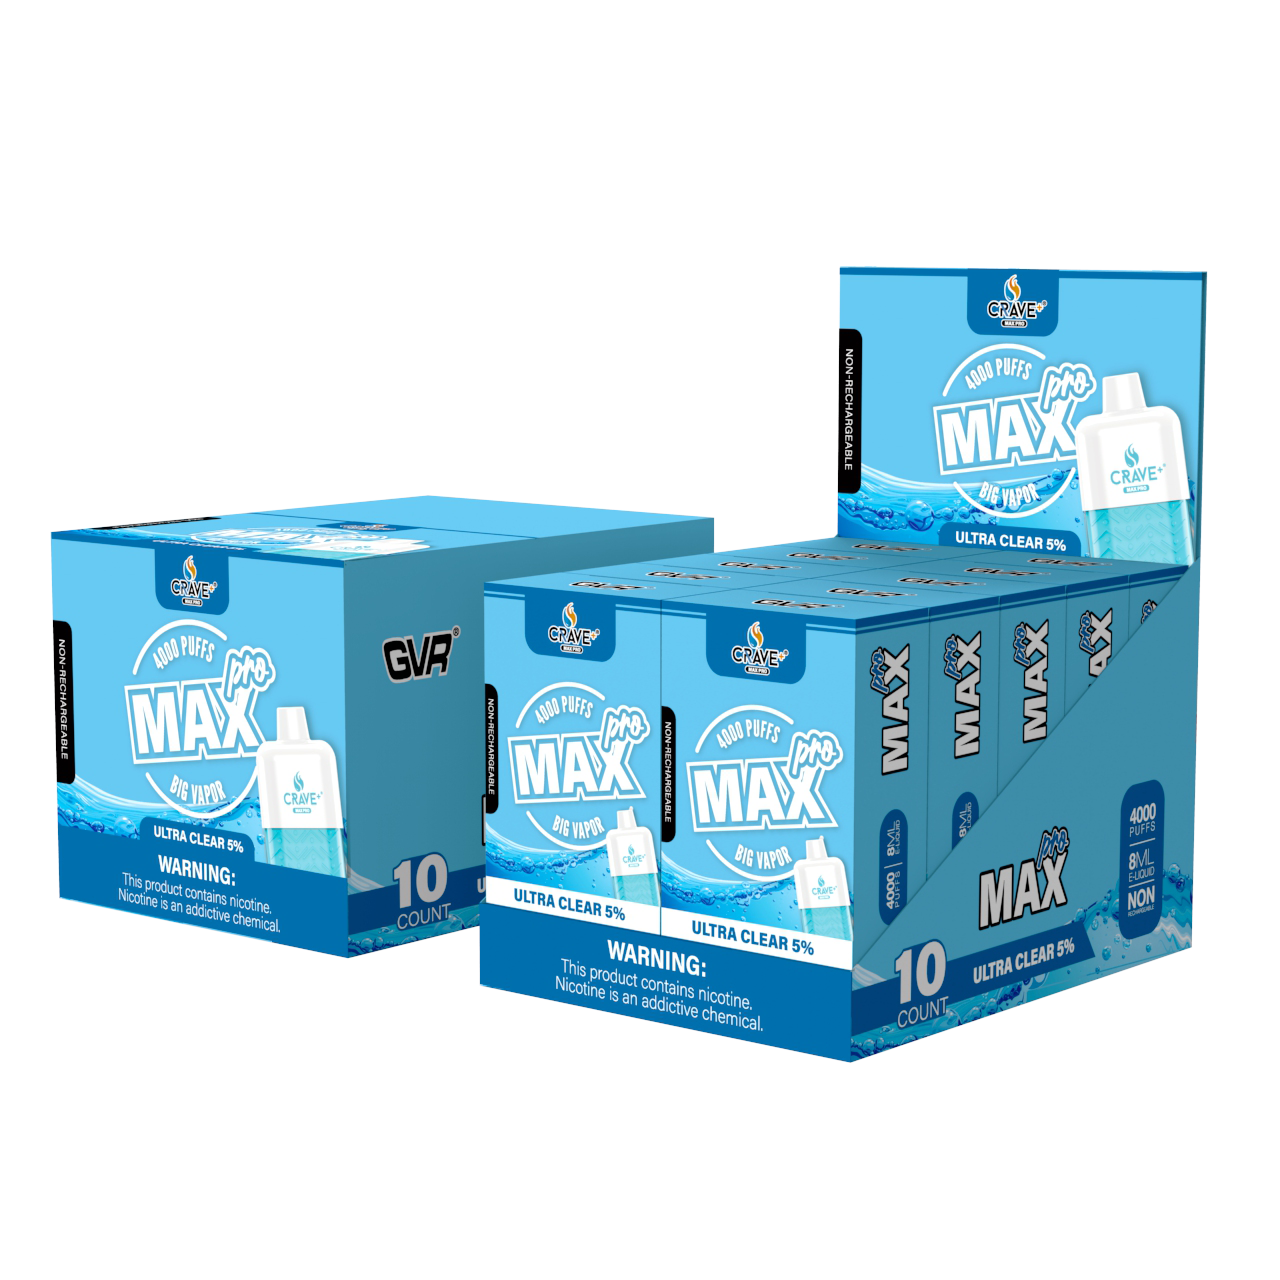 Crave Max Pro Ultra Clear 5% Box